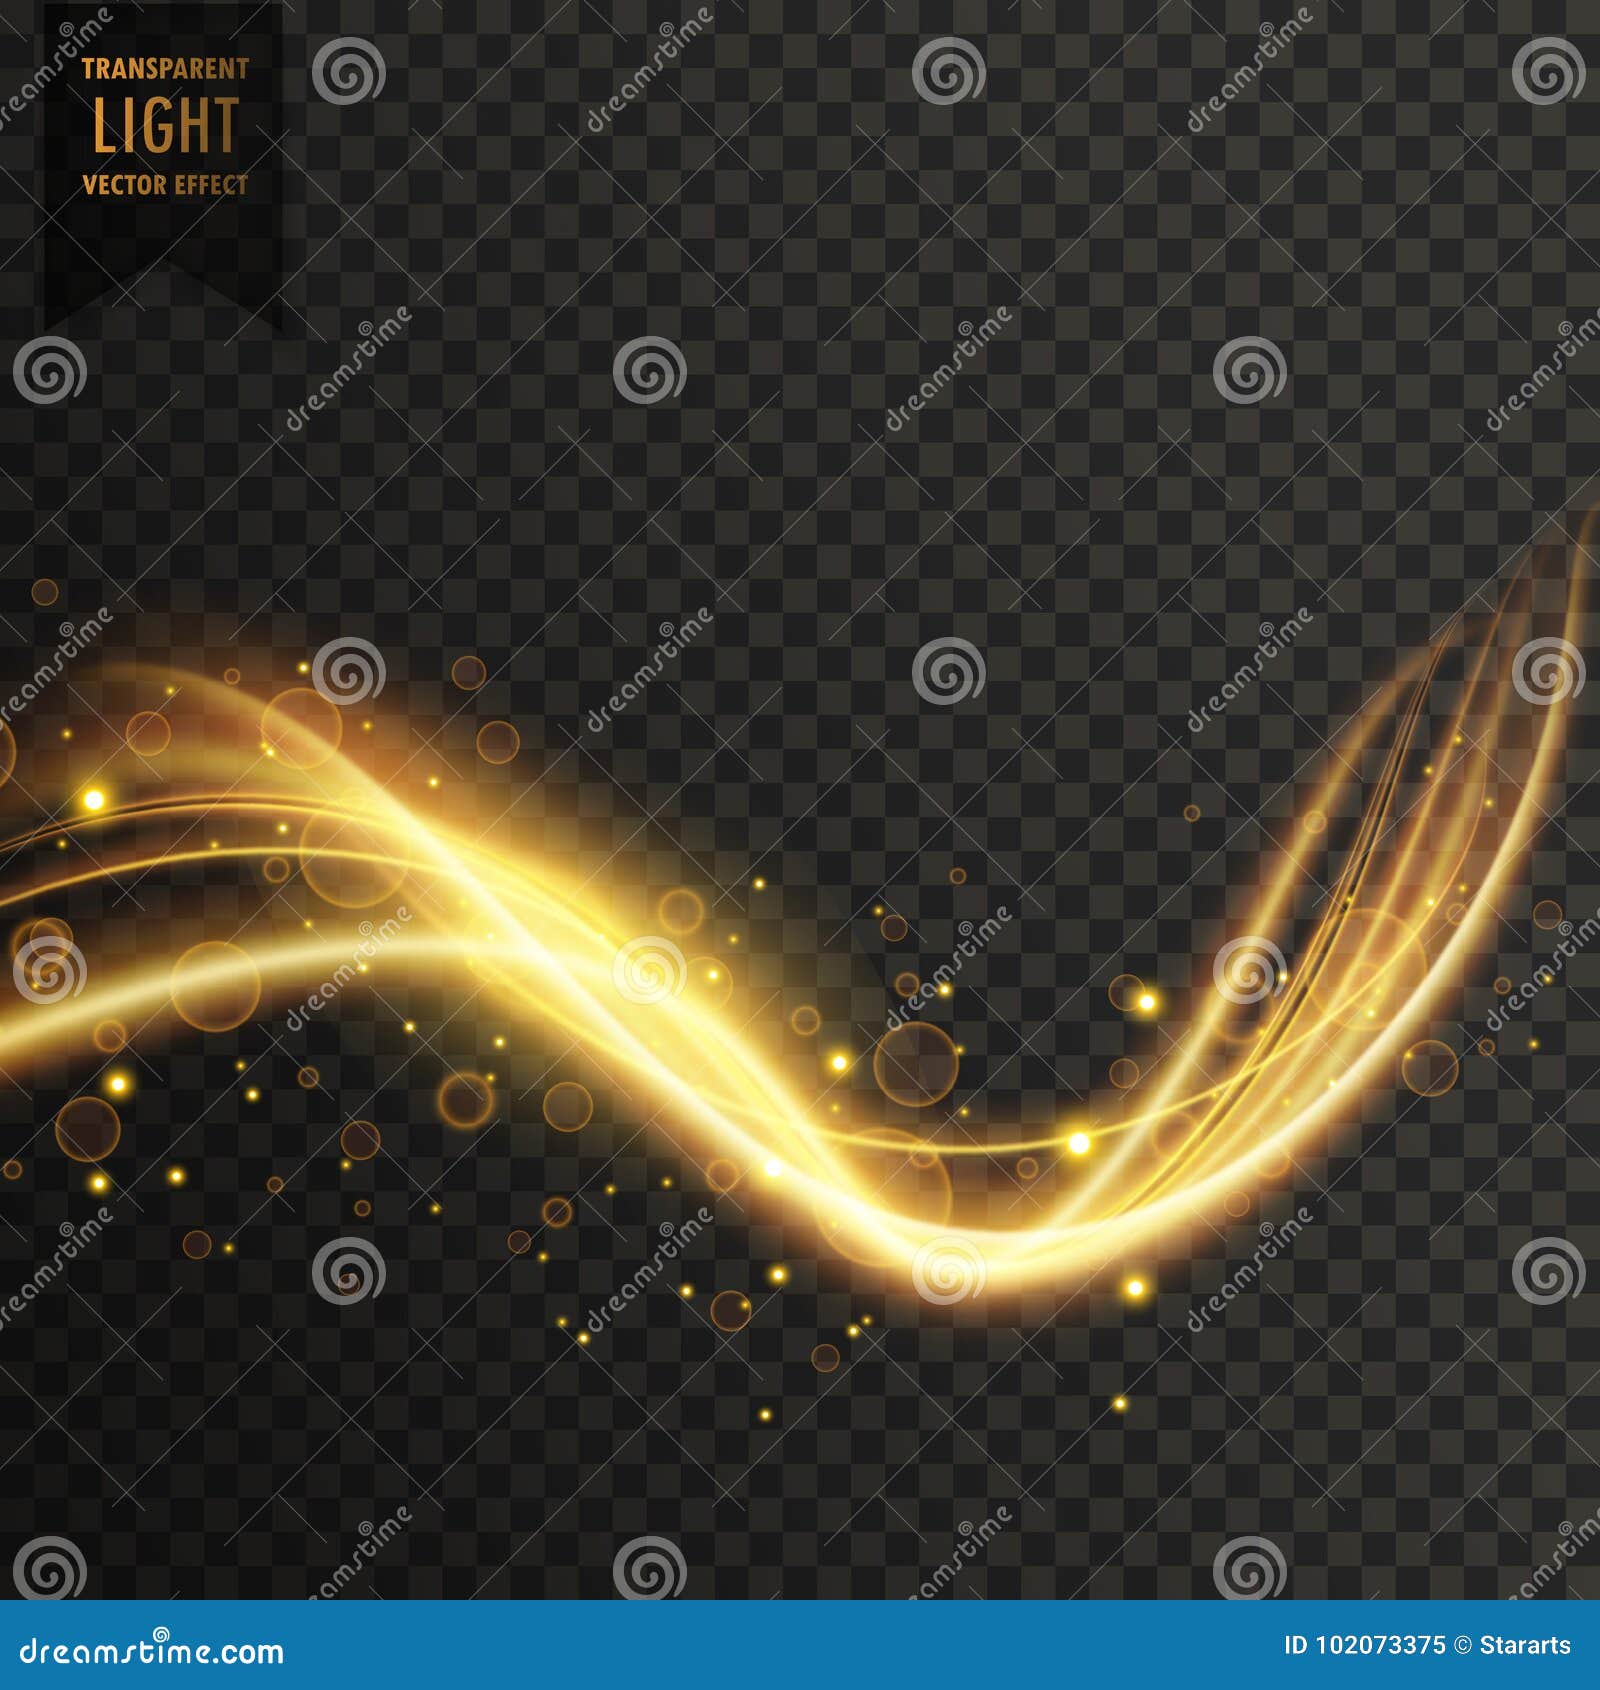 Transparent Golden Light Effect Stock Vector - Illustration of ...